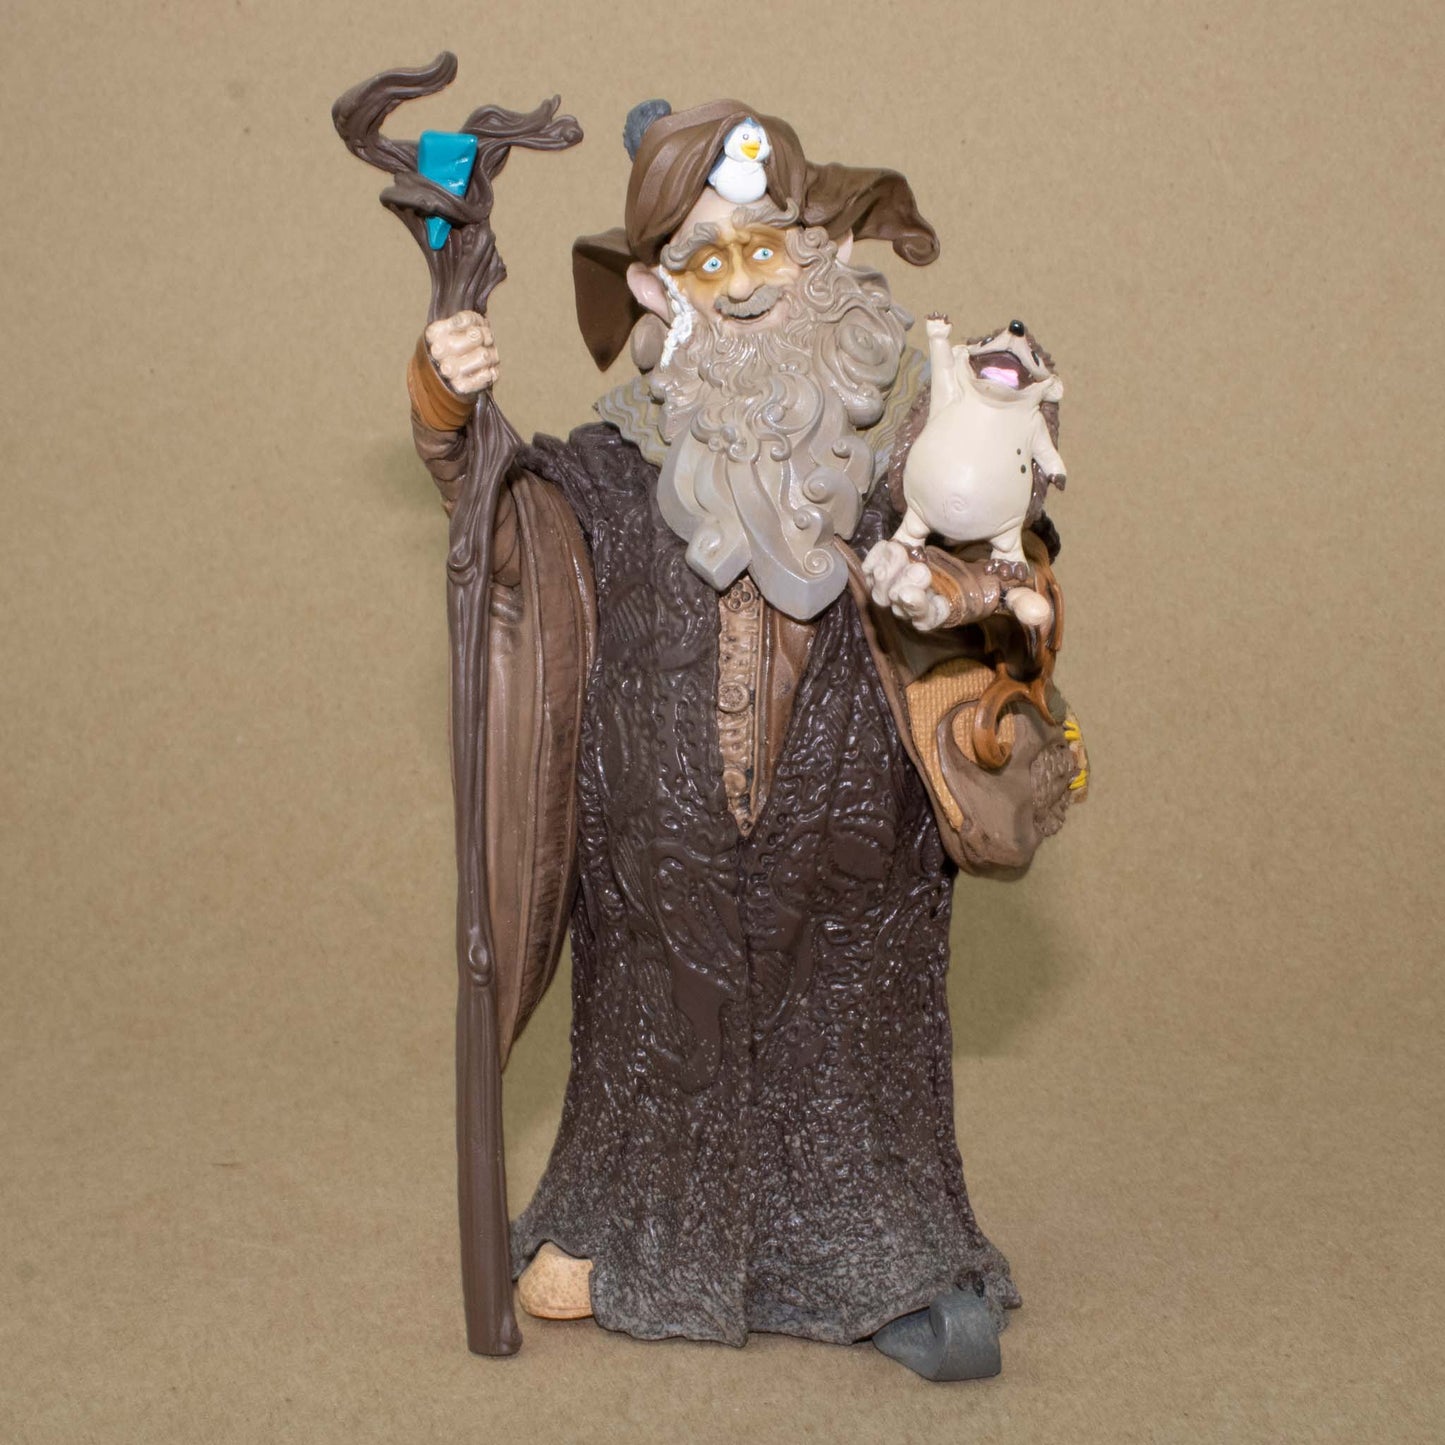 Radagast The Brown (The Hobbit) Mini Epics Statue by Weta Workshop